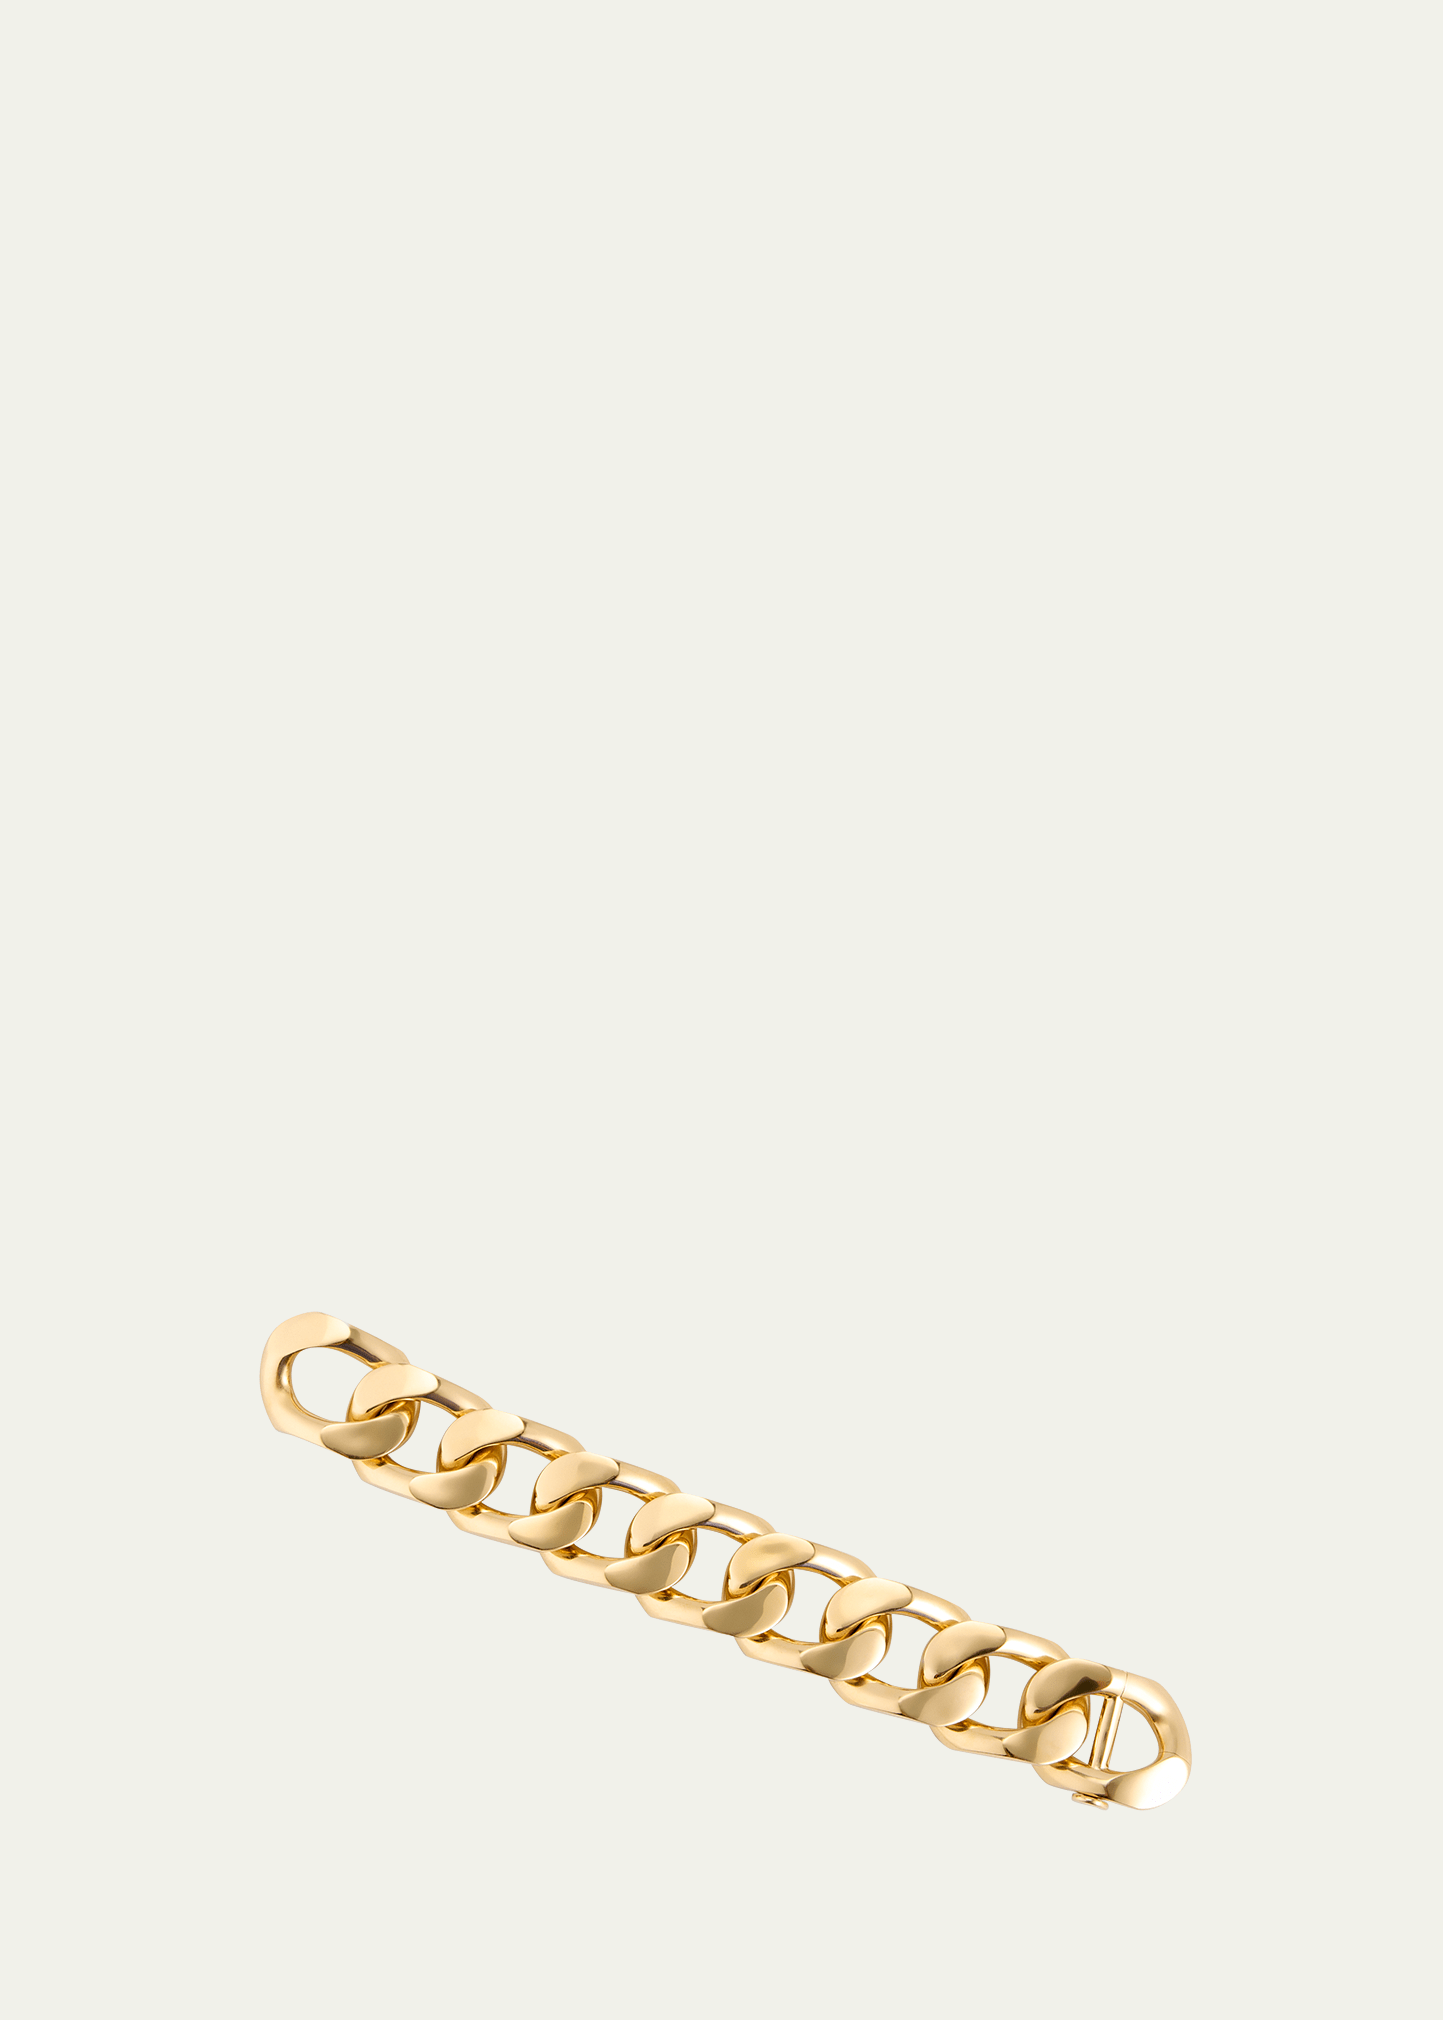 New York 66 Bracelet, Big, in Yellow Gold, 9 Links